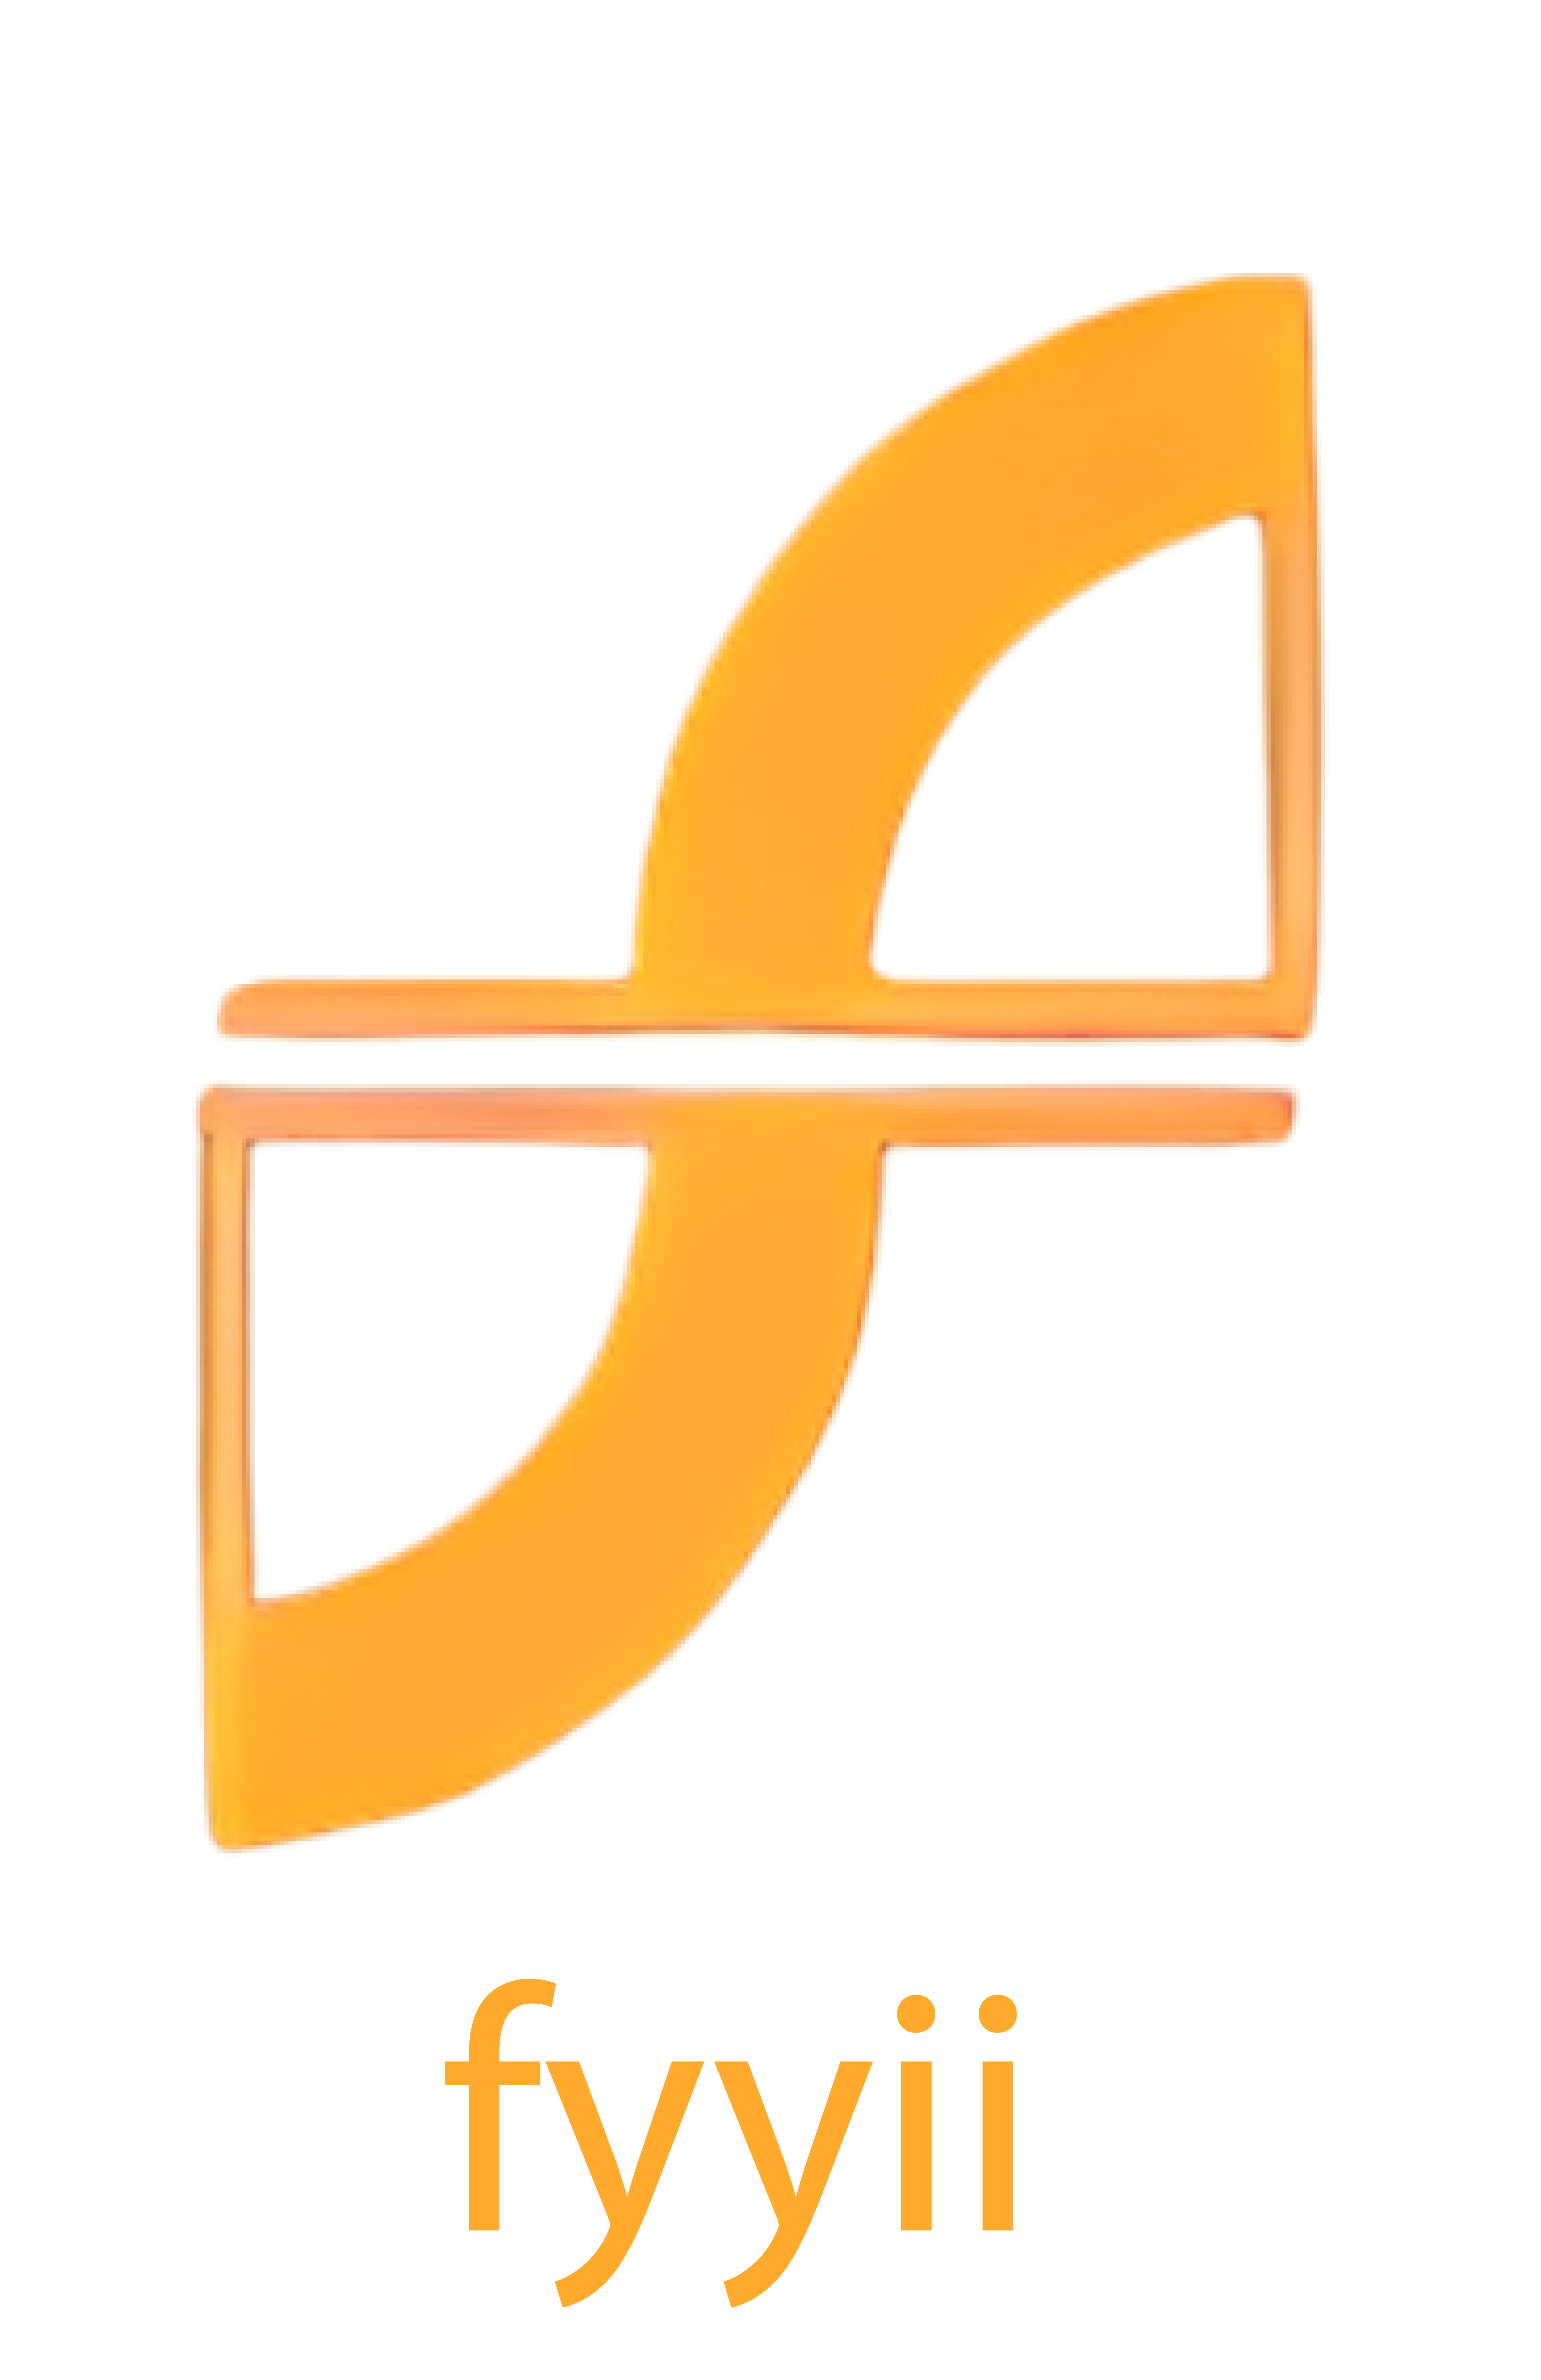 Fyyii Logo